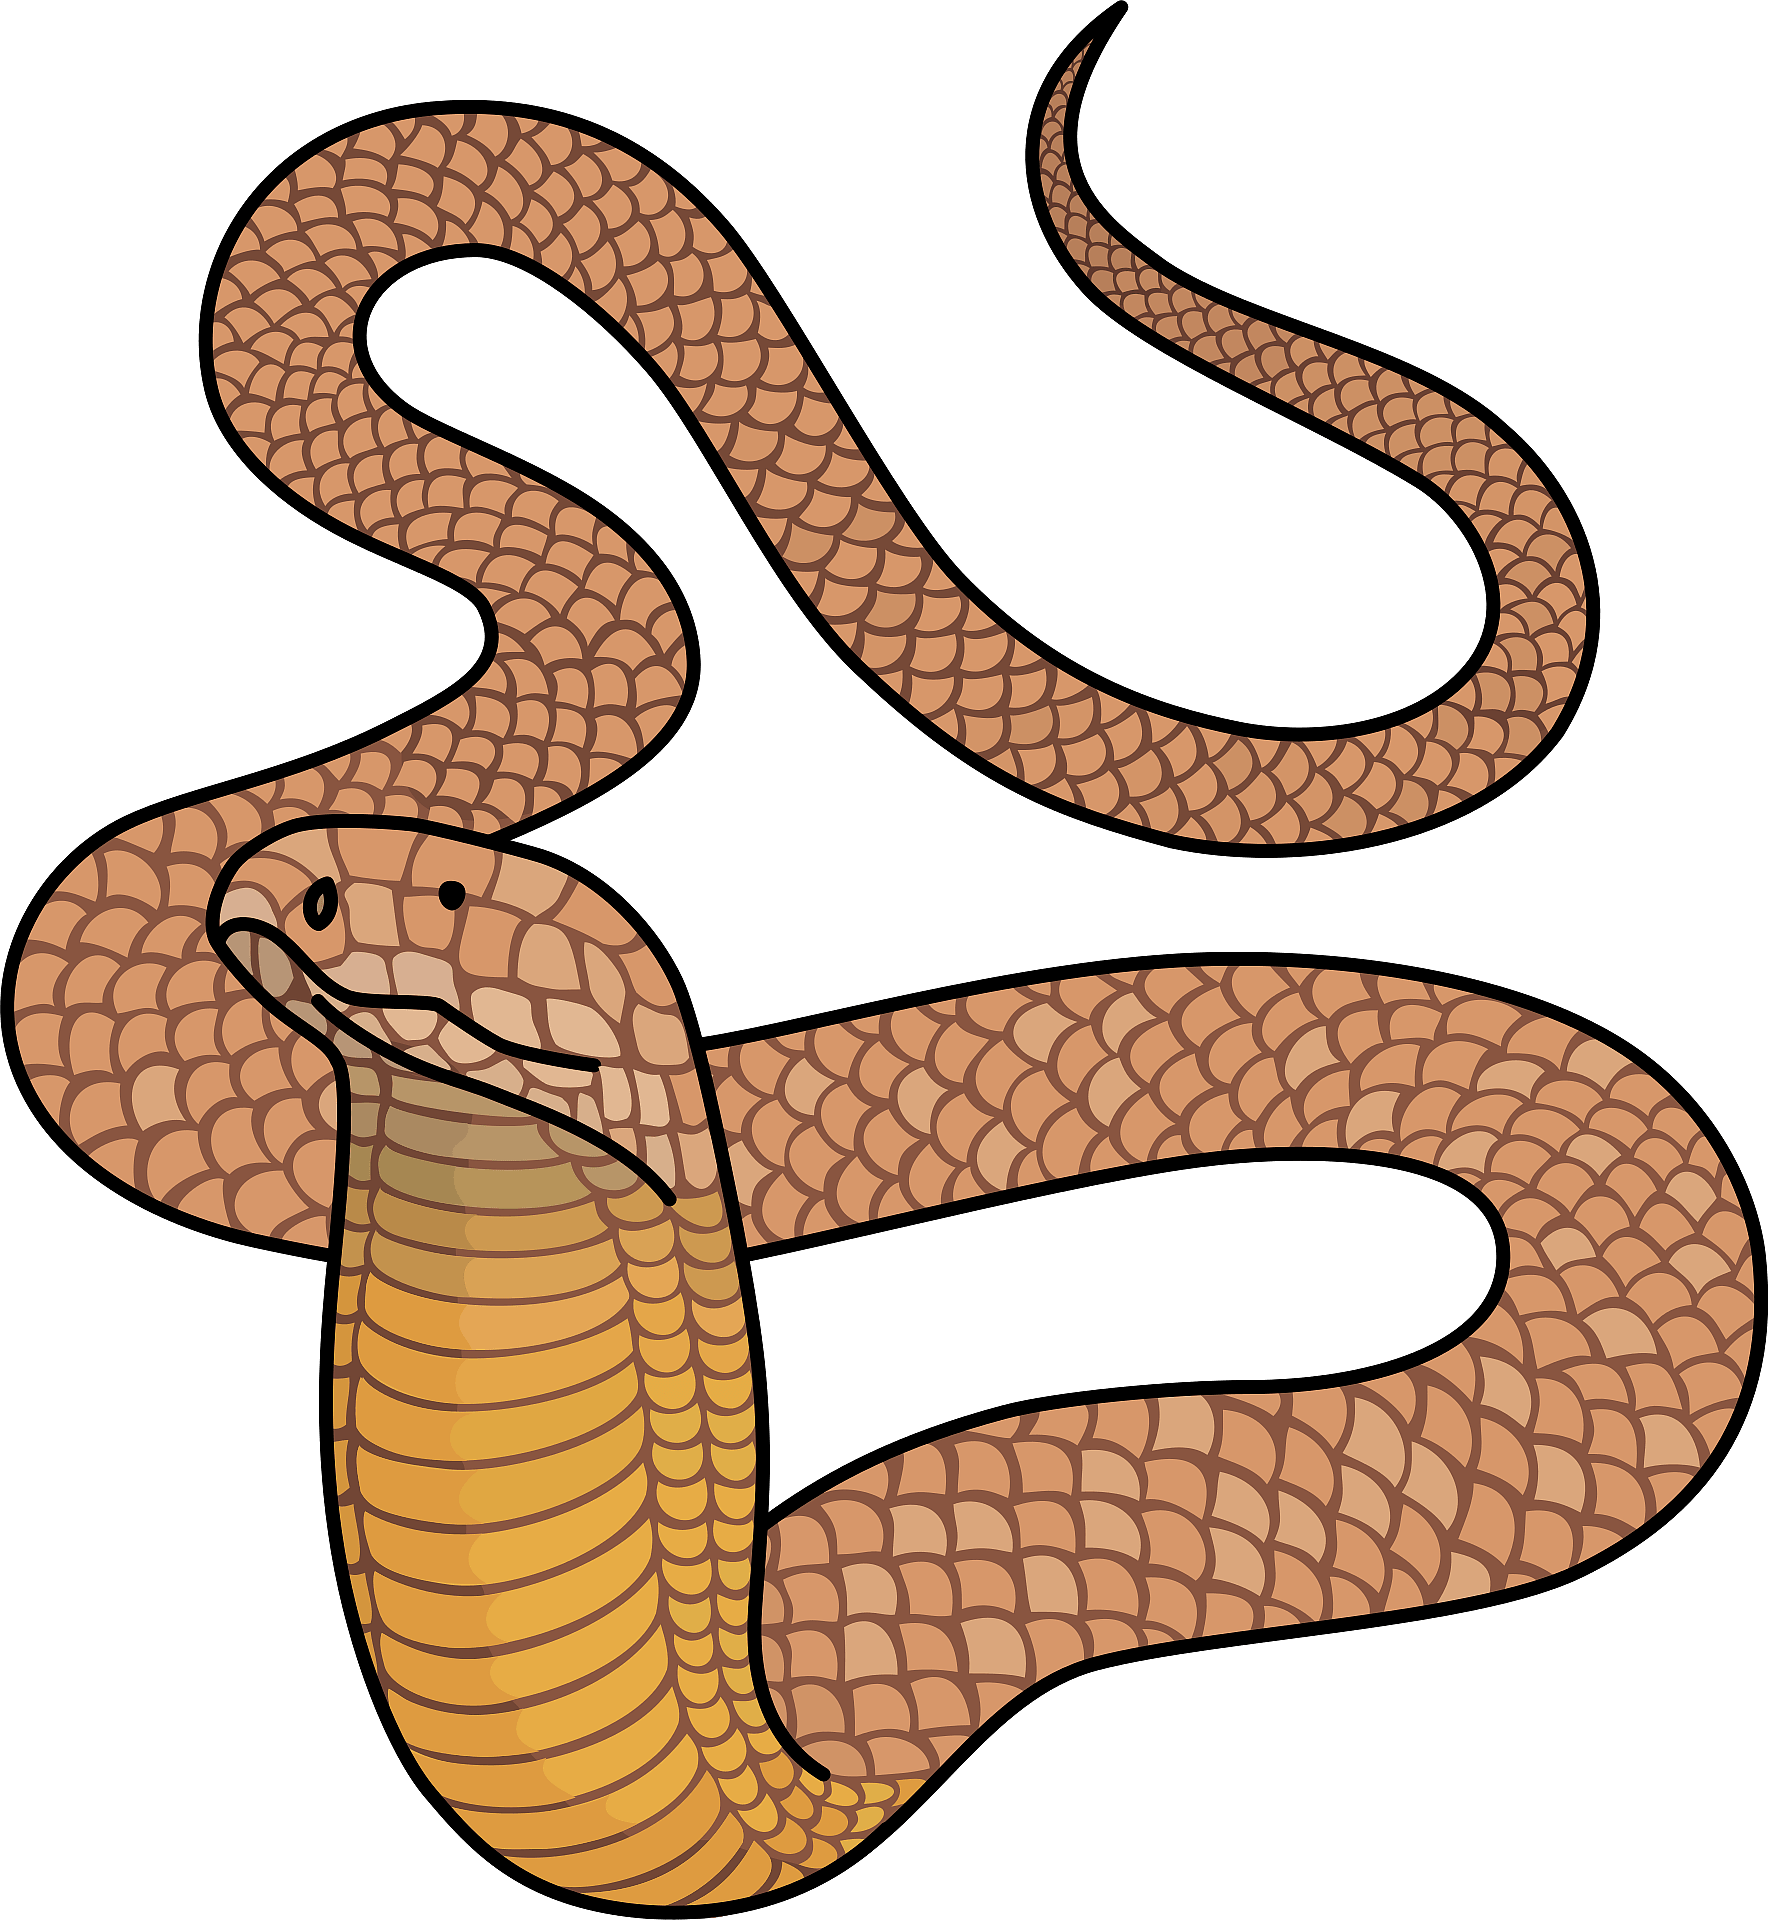 King Cobra Snake Wall Decal – Wallmonkeys